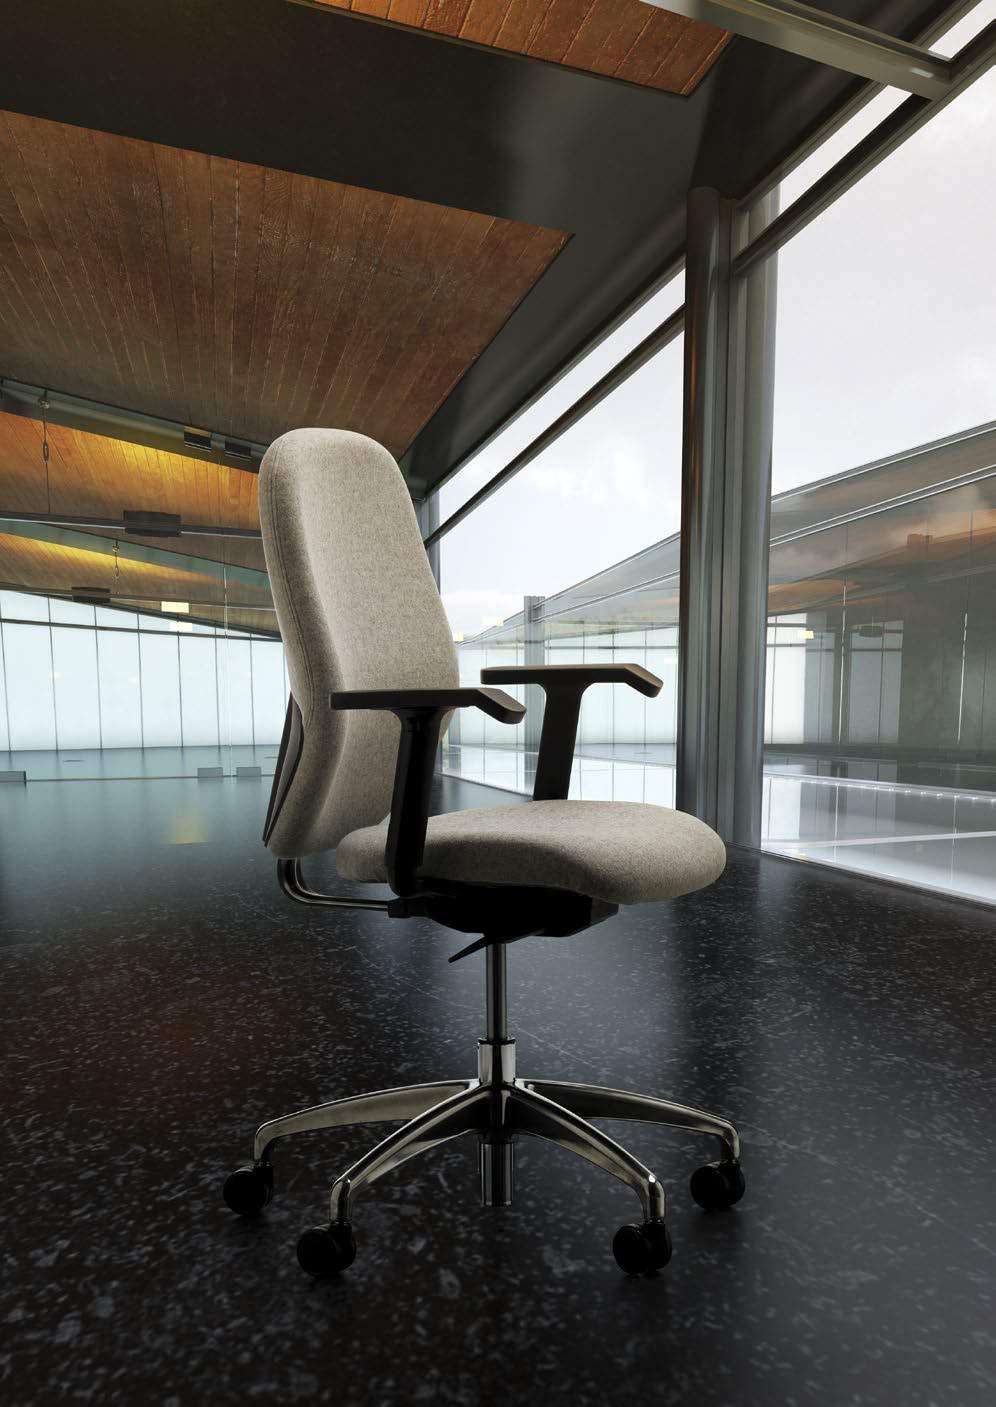 Profile lite_ Ergonomic seating designed by Verco Effortless & assured